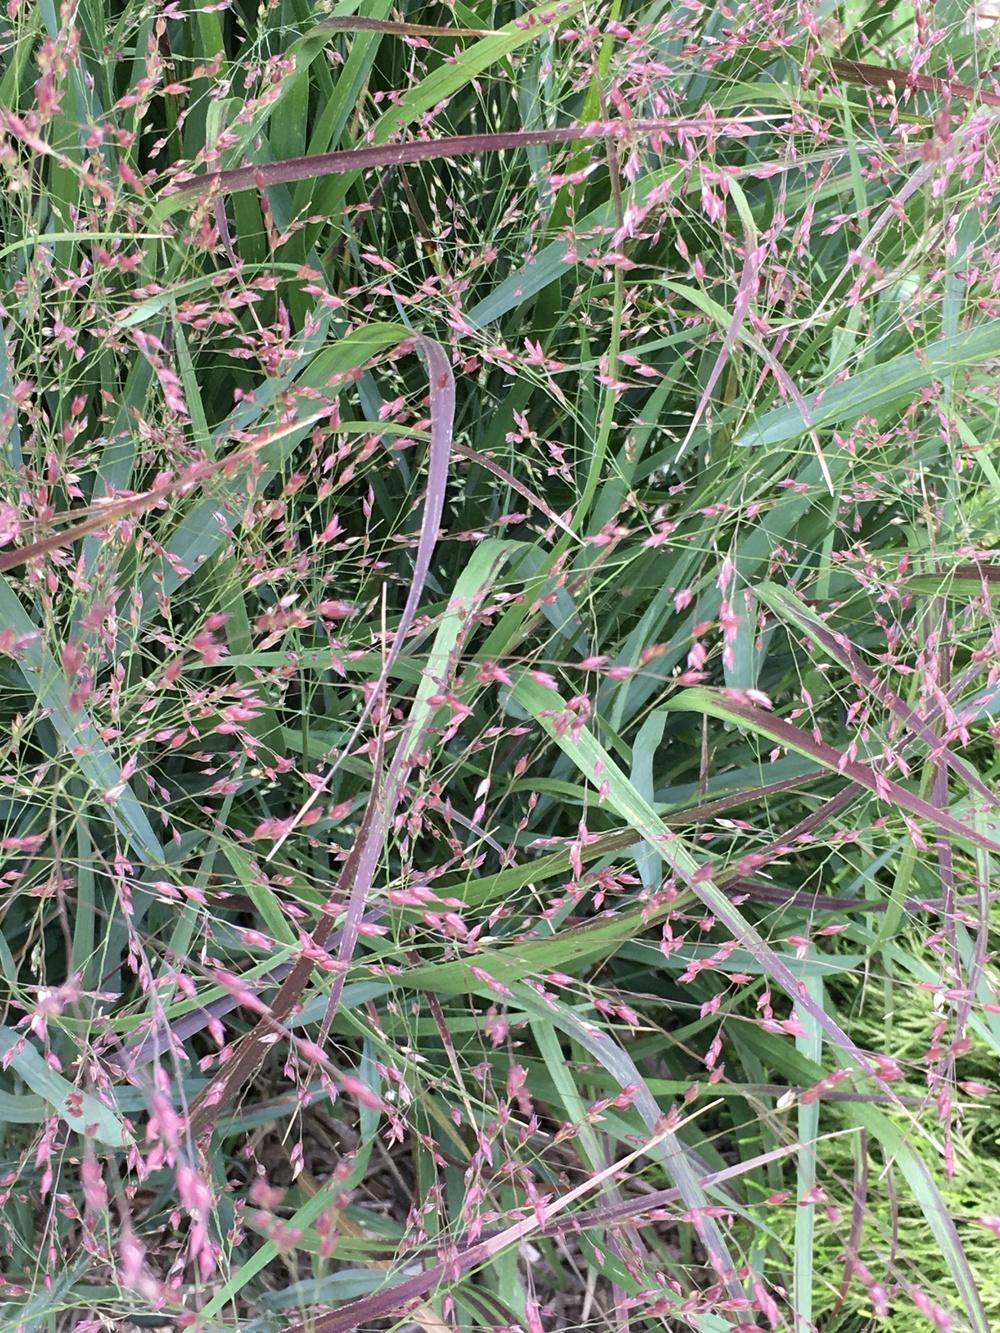 Photo of Switch Grass (Panicum virgatum 'Shenandoah') uploaded by Legalily